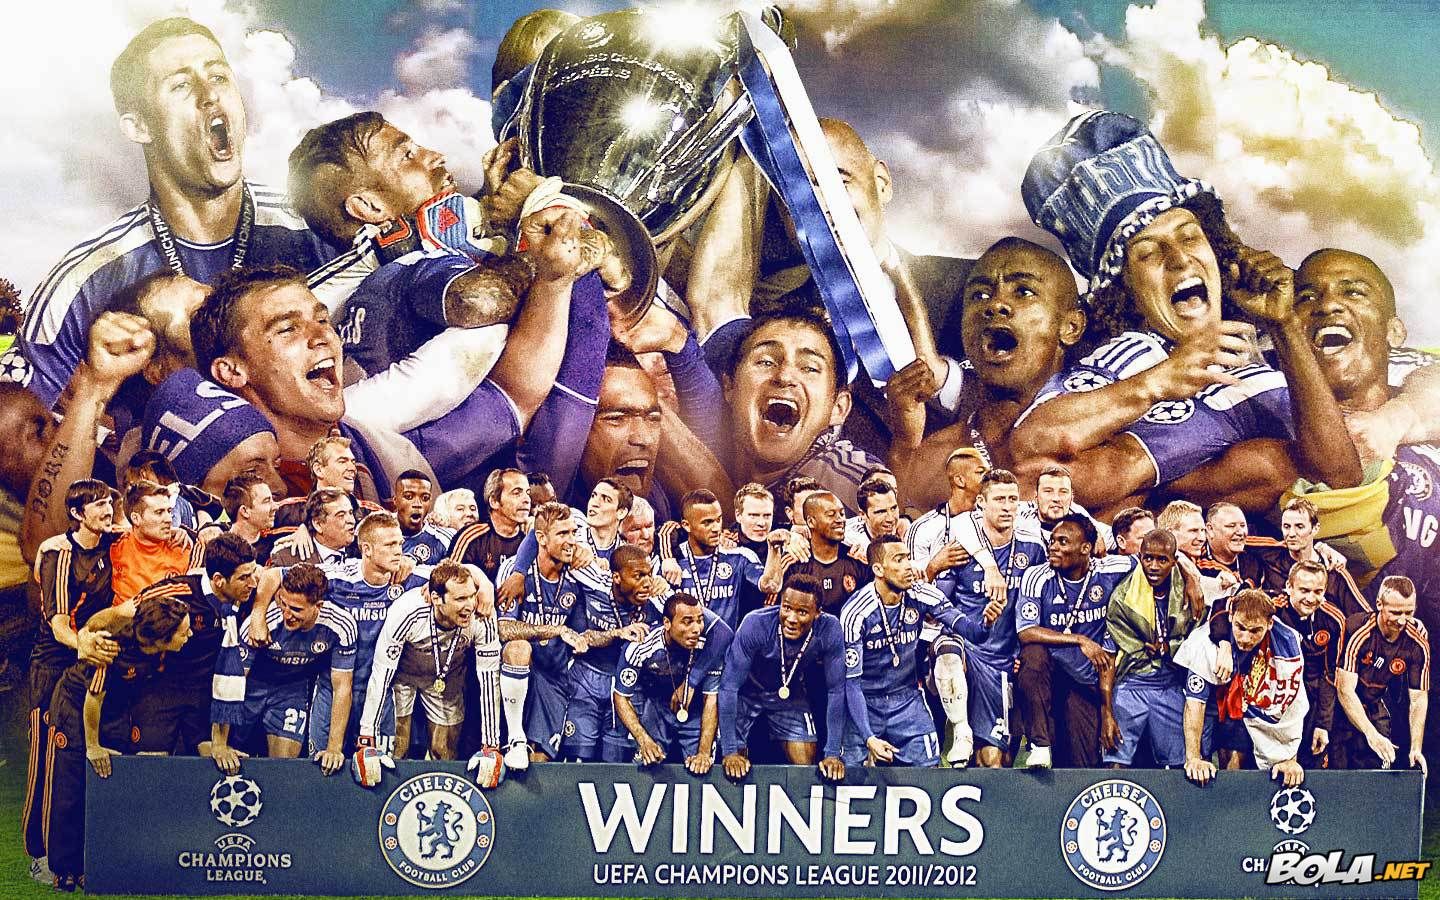 Wallpaper Chelsea Champions, size: 1440x900. Chelsea champions, Chelsea champions league, Champions league